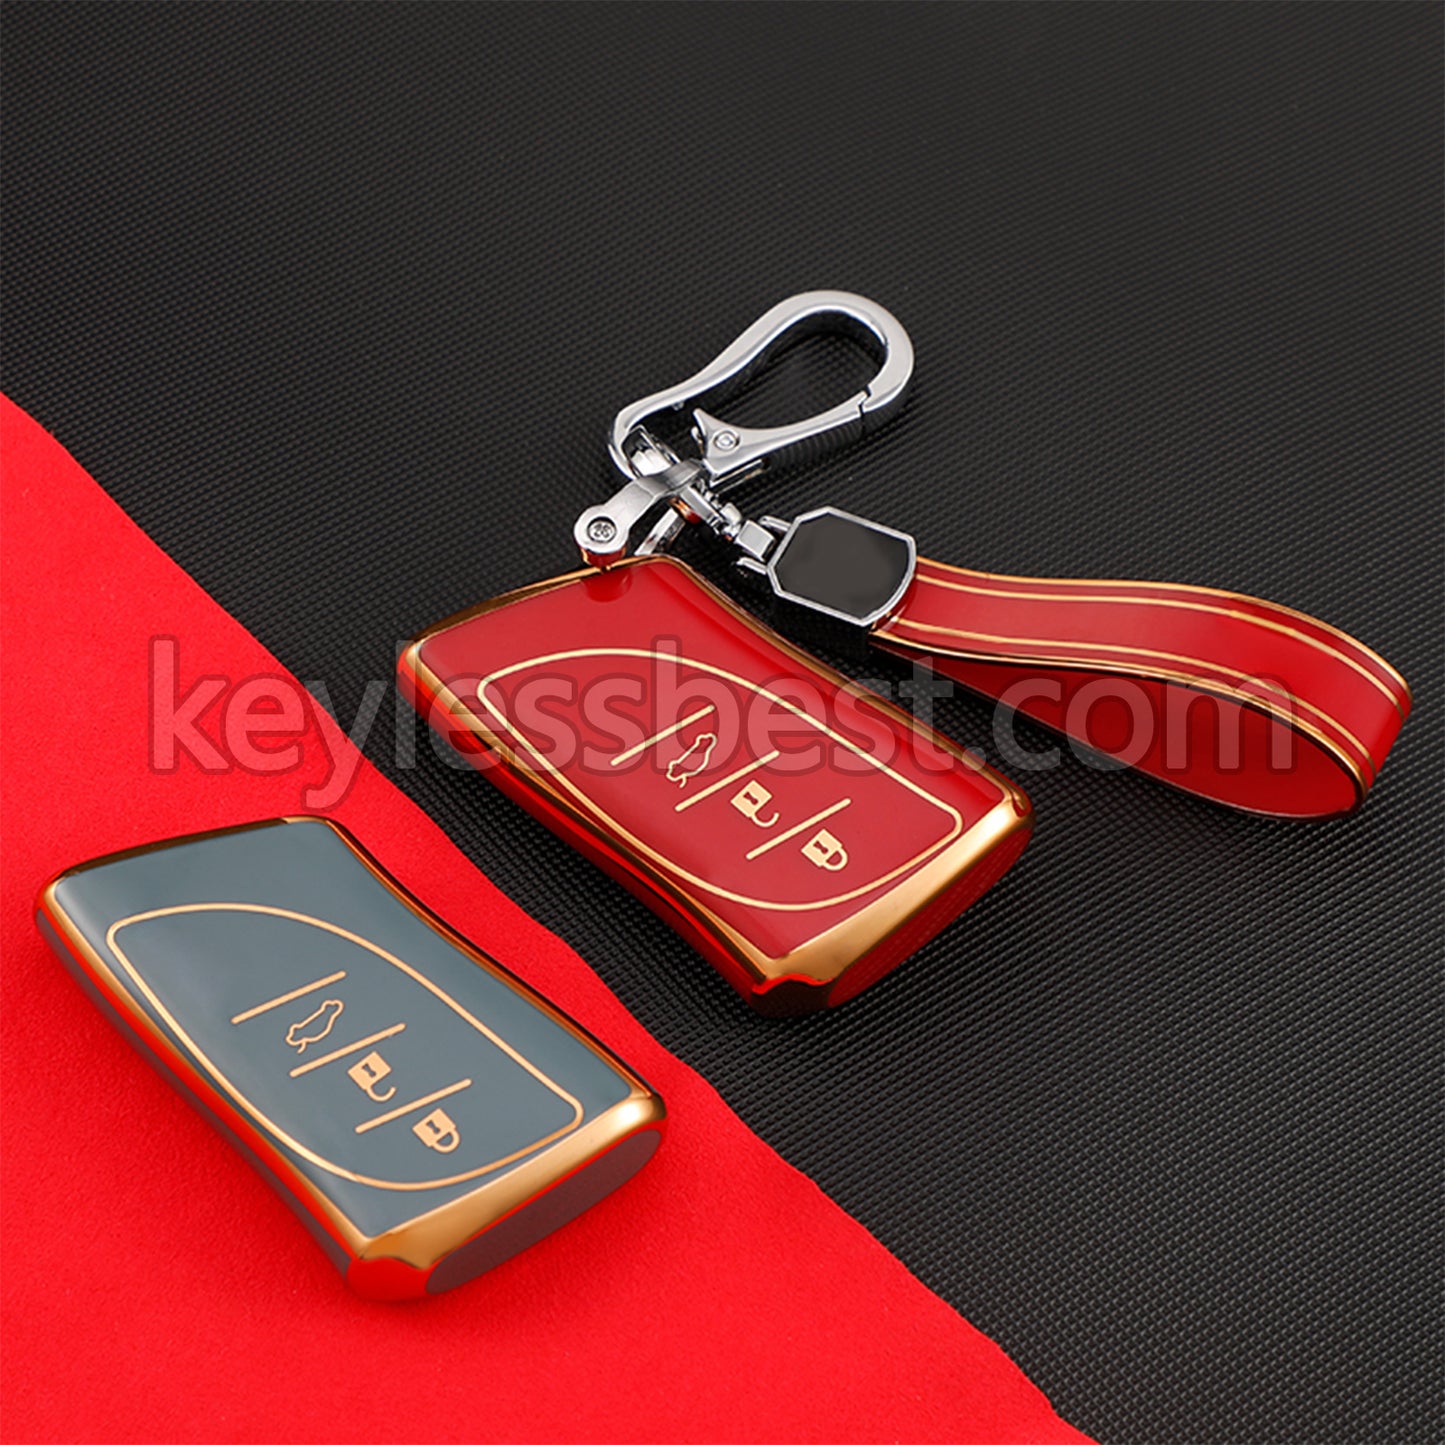 TPU Car Key cover For Lexus Car Key cover case holder